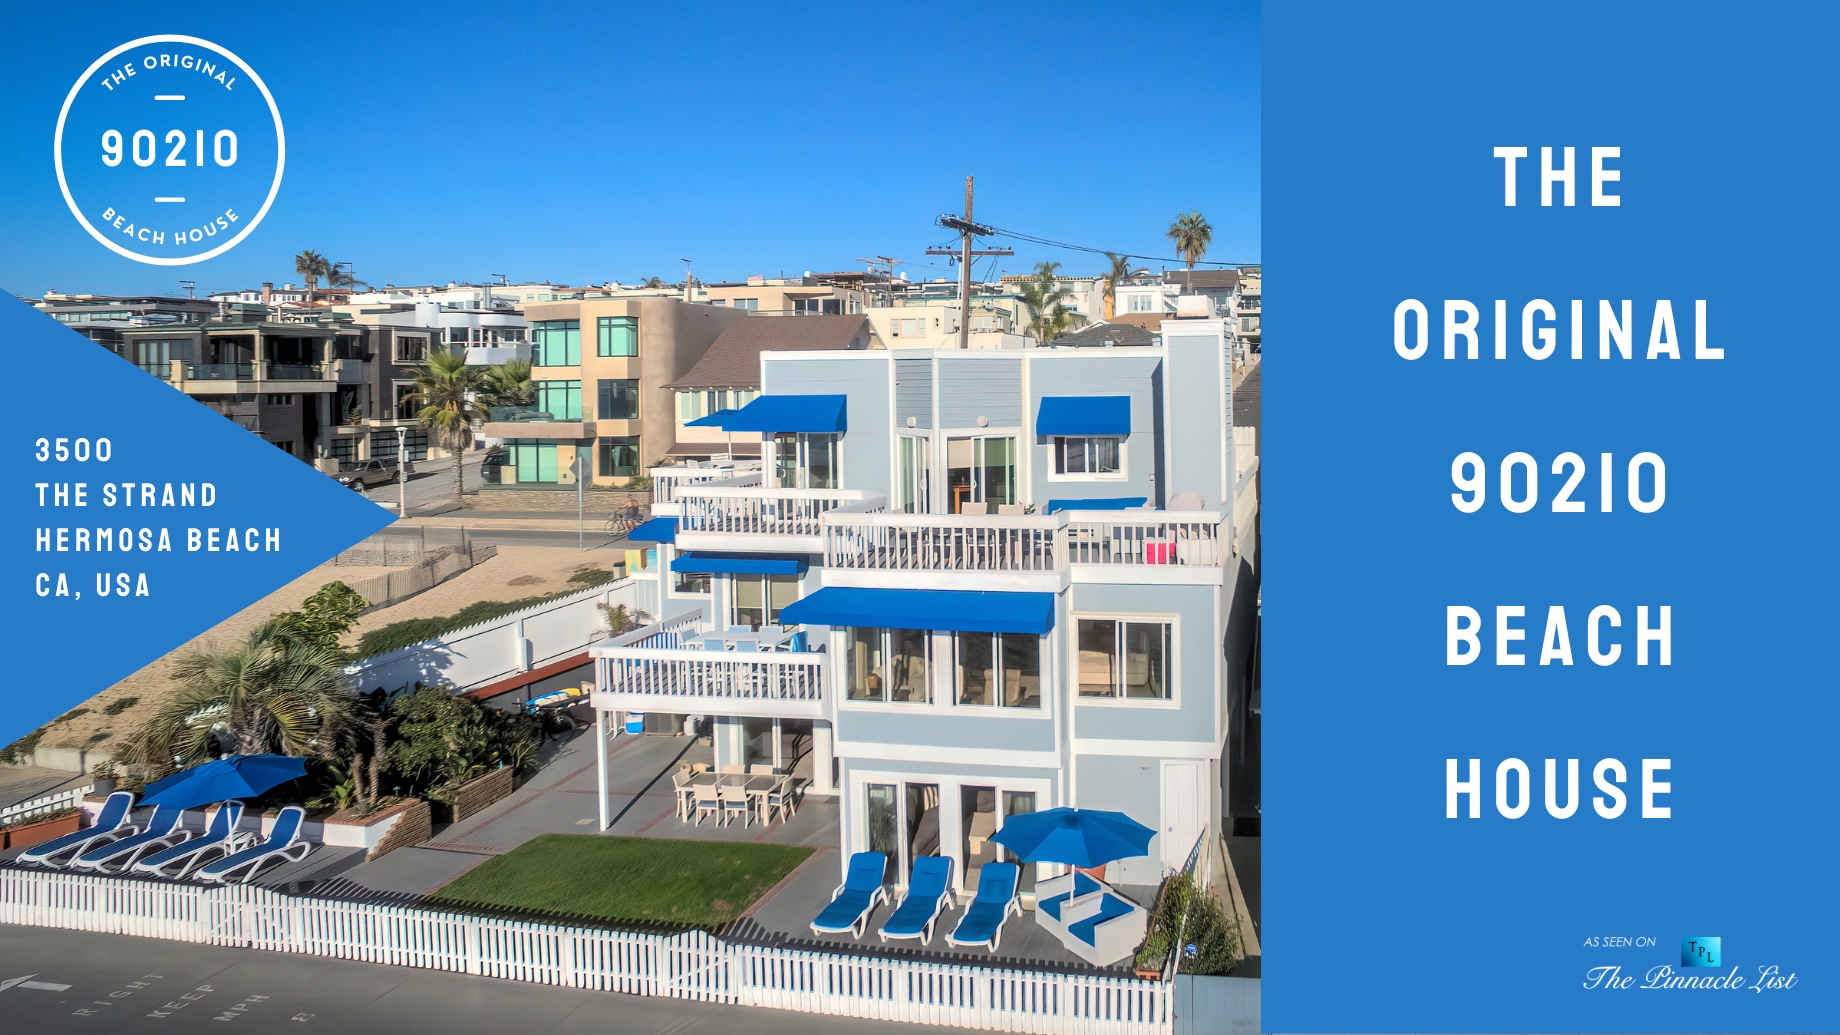 The Original 90210 Beach House – 3500 The Strand, Hermosa Beach, CA, USA